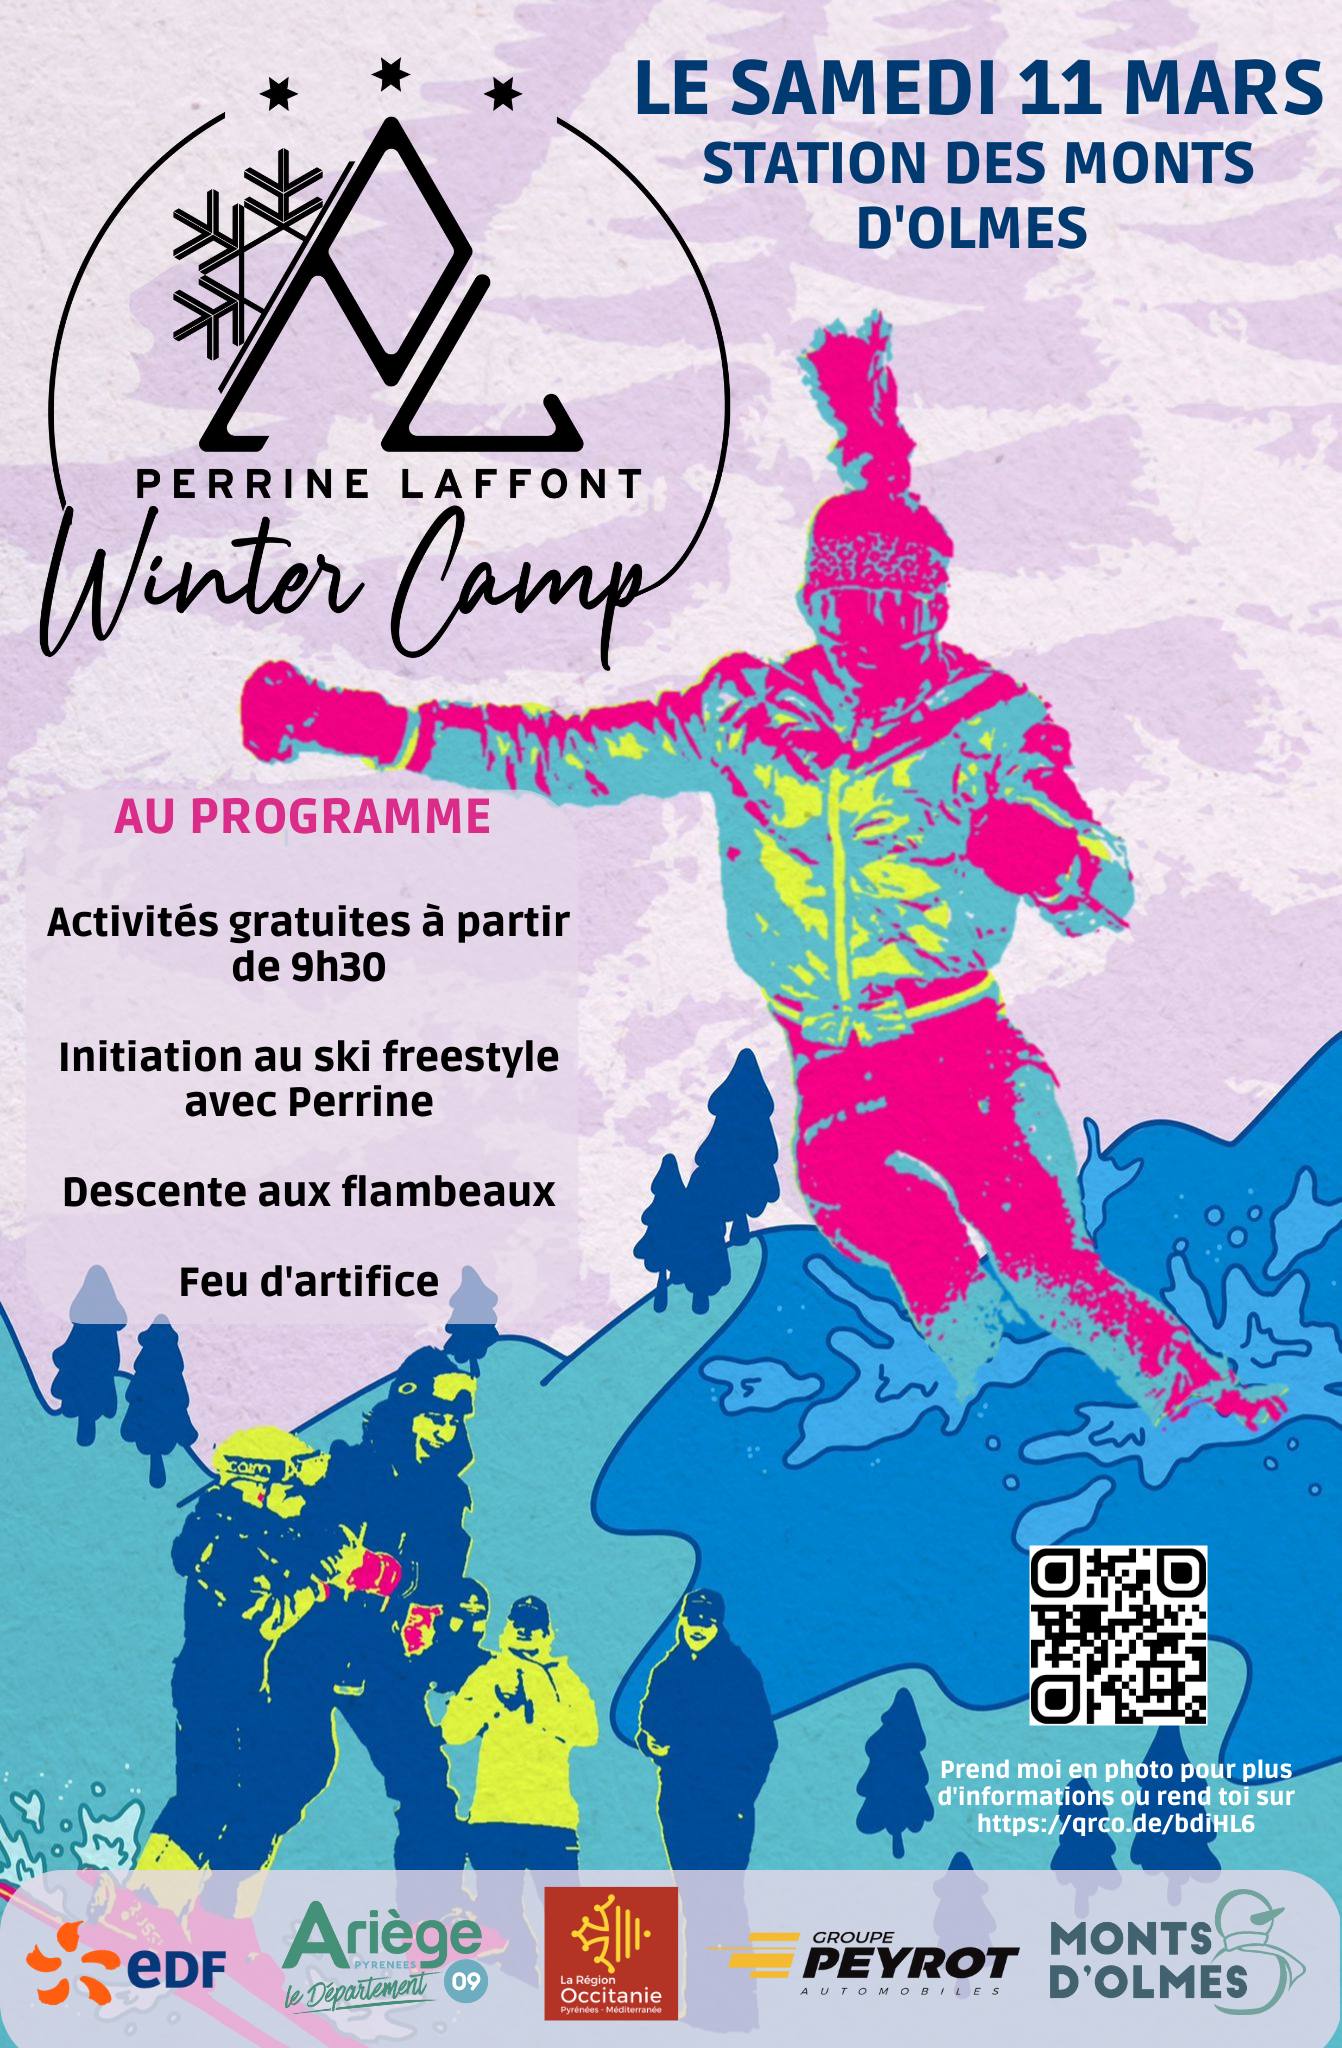 Perrine Laffont Winter Camp - 2° Edition le 11 Mars aux Monts d'Olmes !